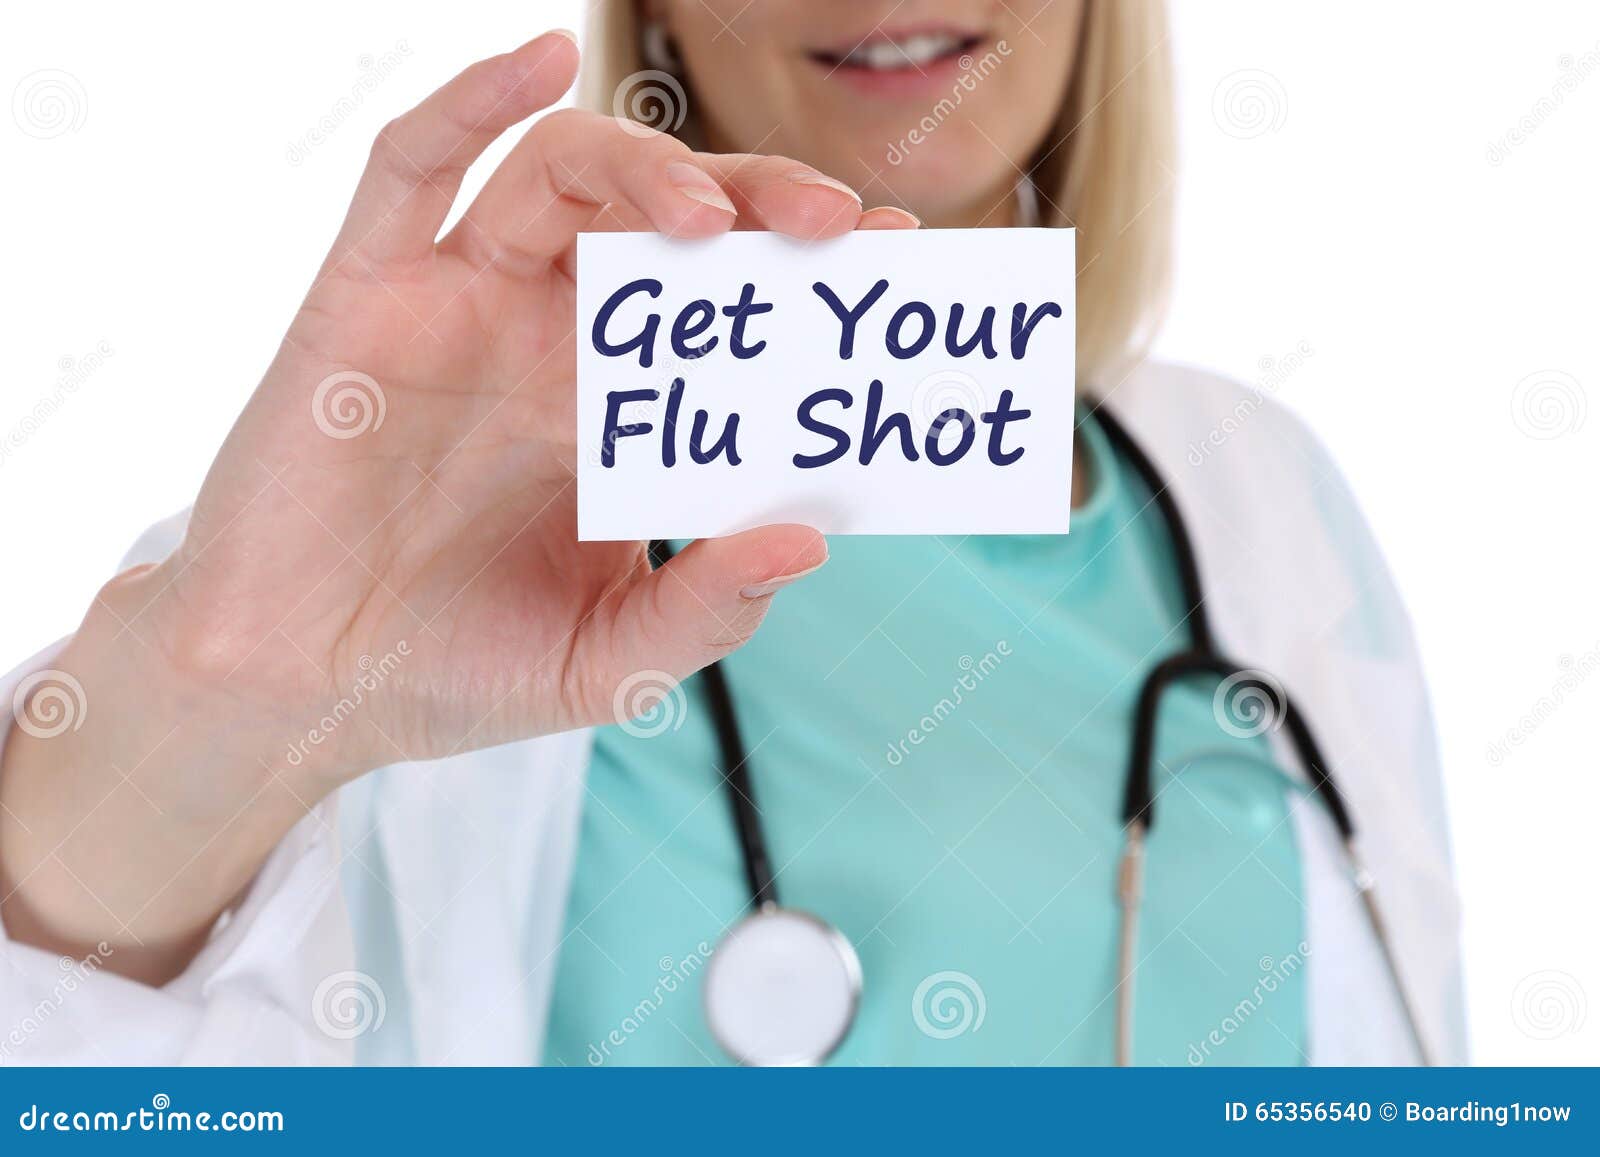 get your flu shot disease ill illness healthy health doctor nurse